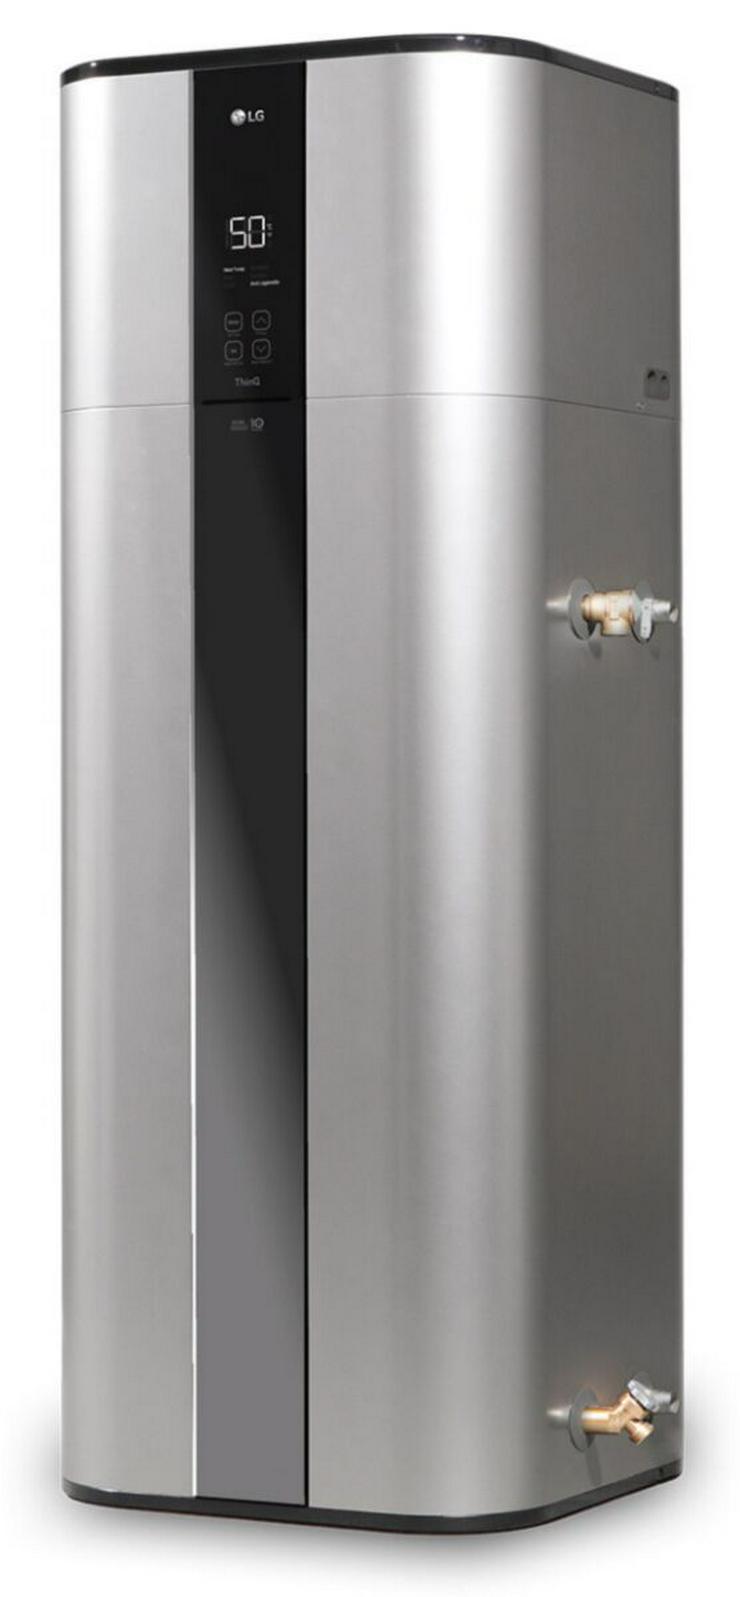 Bild 1: 1A Luft Warmwasser Wärmepumpe LG Therma V Dual-Inverter R134A